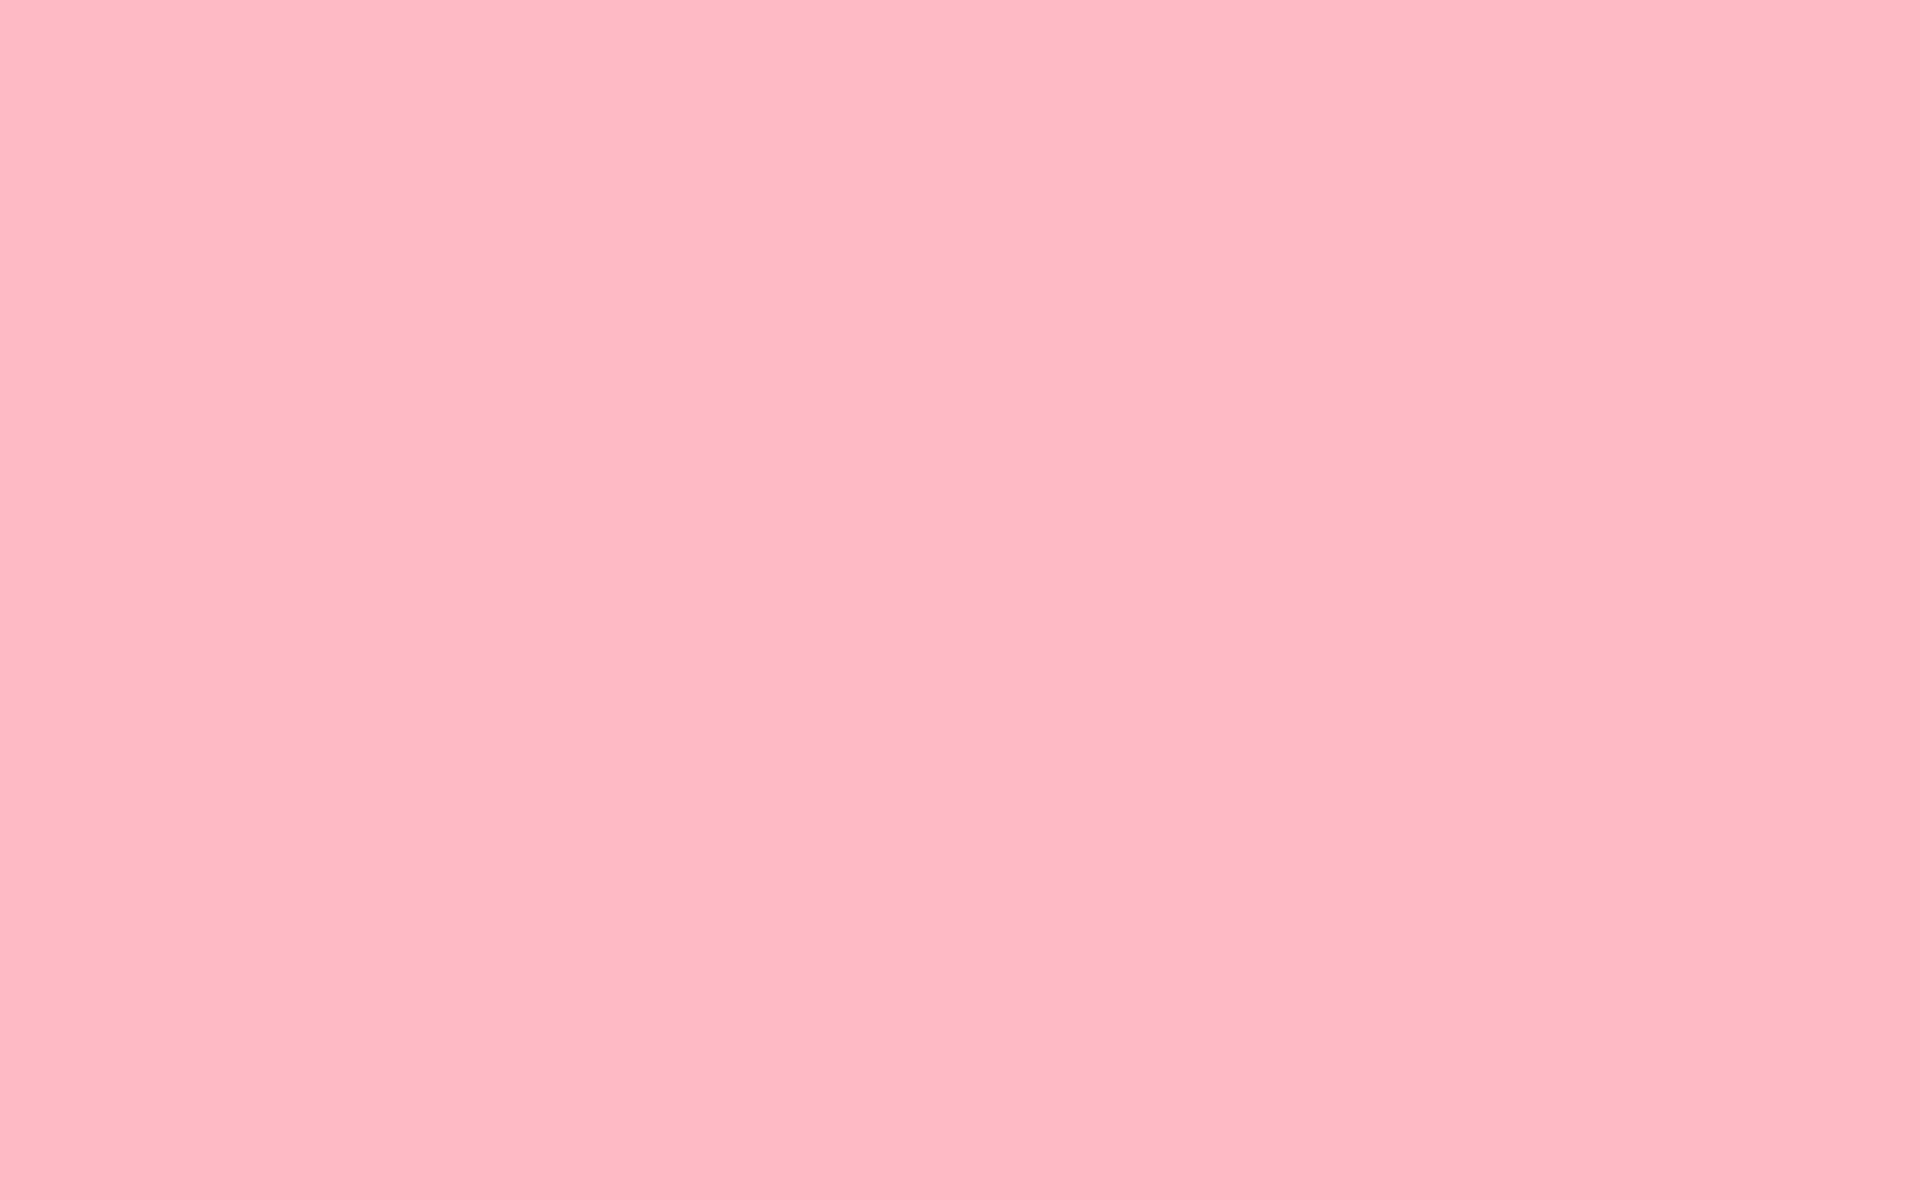 Solid Pink 2880 X 1800 Wallpaper